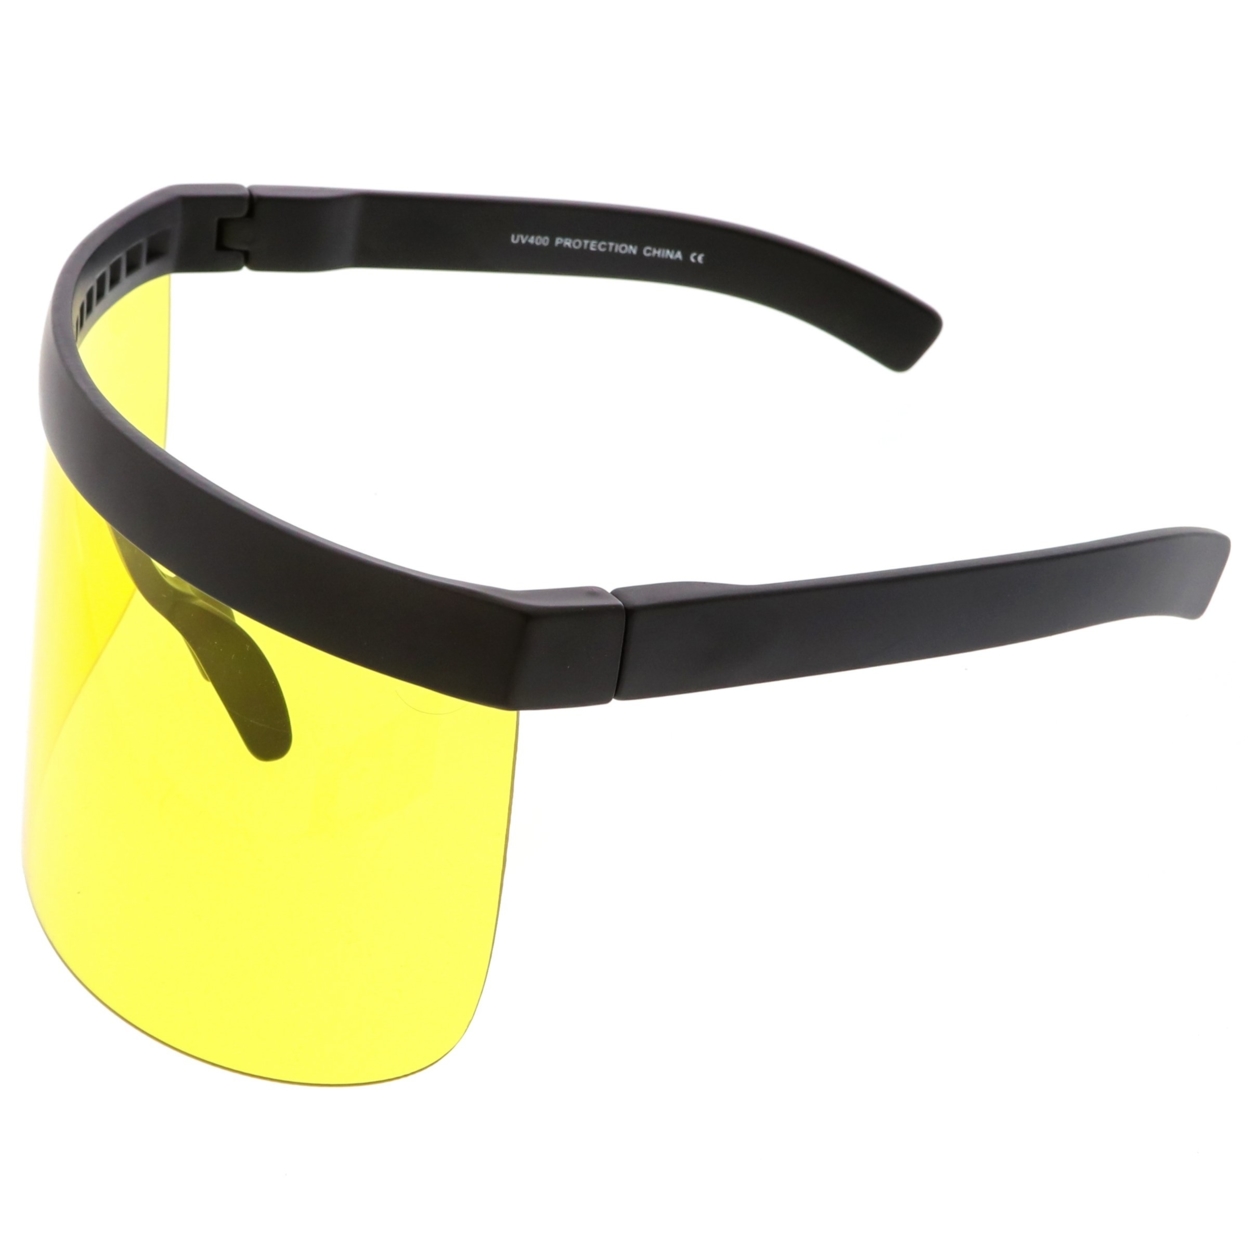 Futuristic Oversize Shield Visor Sunglasses With Flat Top Colored Mono Lens 172mm - Yellow